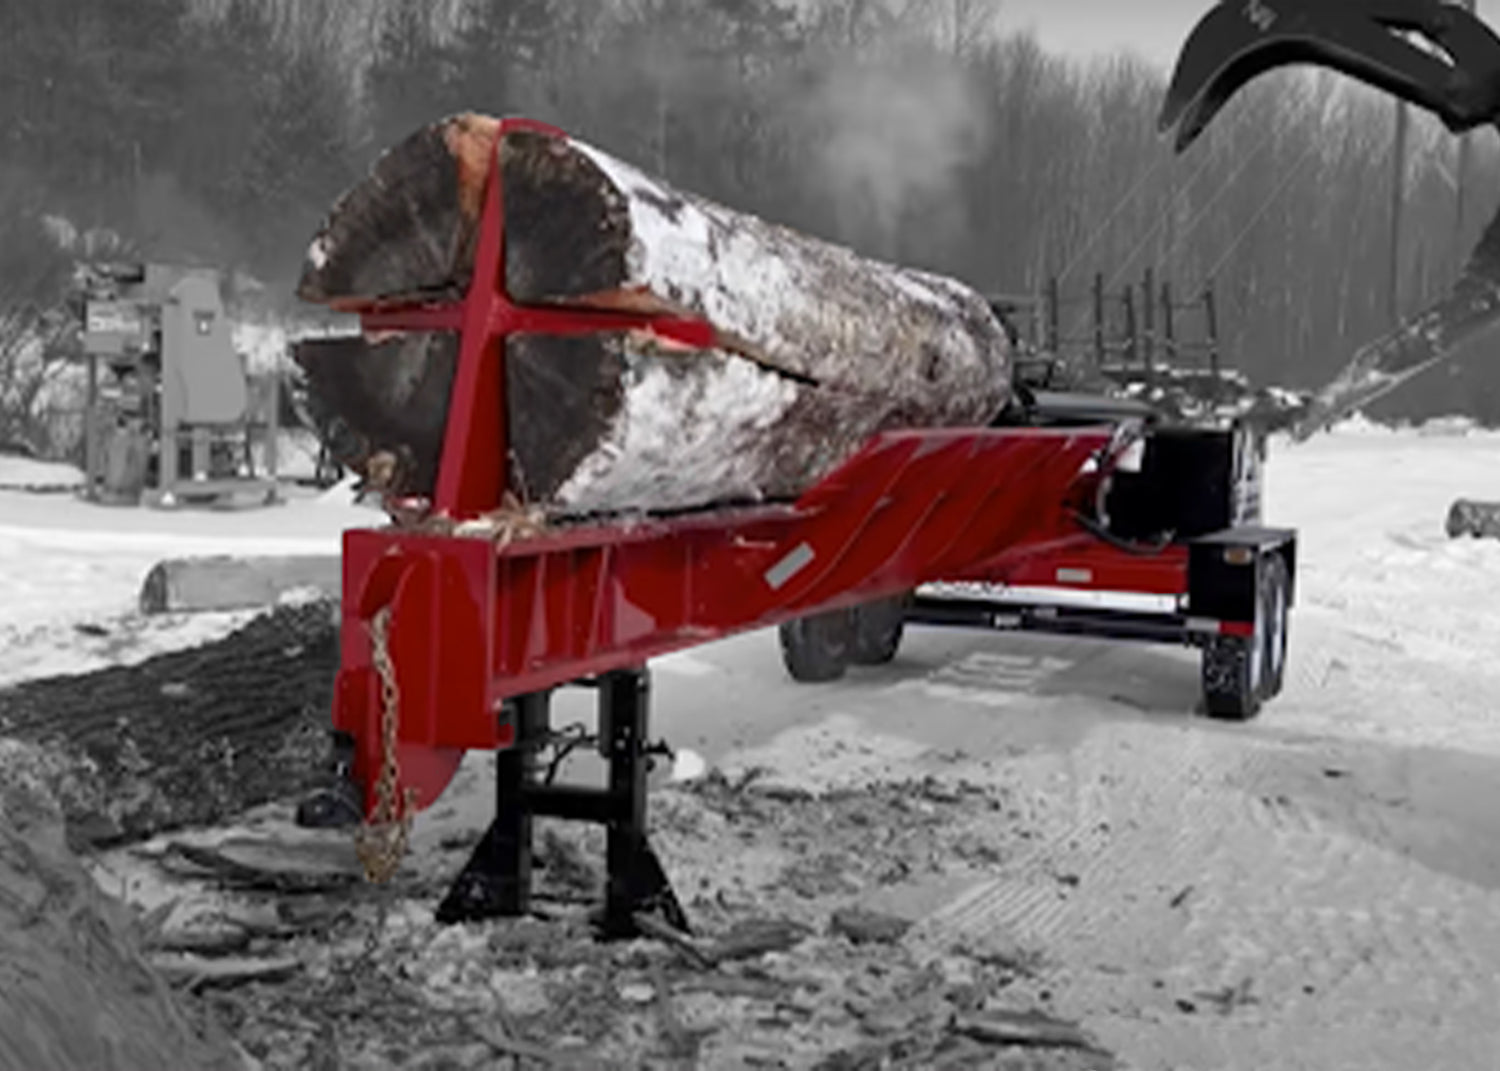 Timberwolf Firewood Processing Equipment